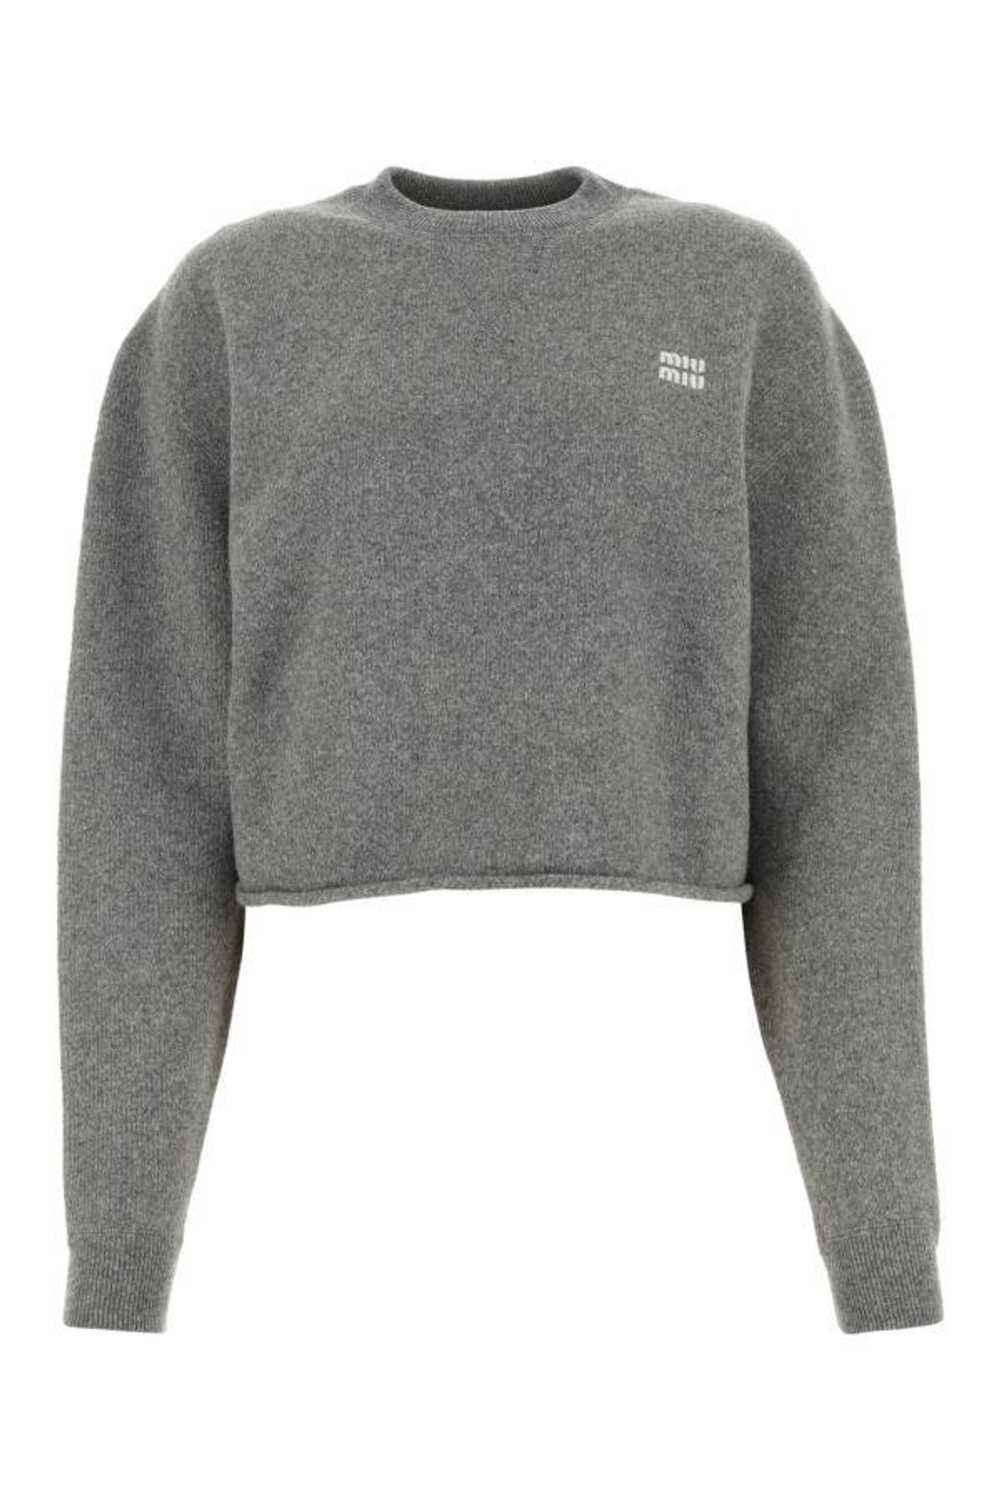 Miu Miu Grey Wool Blend Sweater - image 3